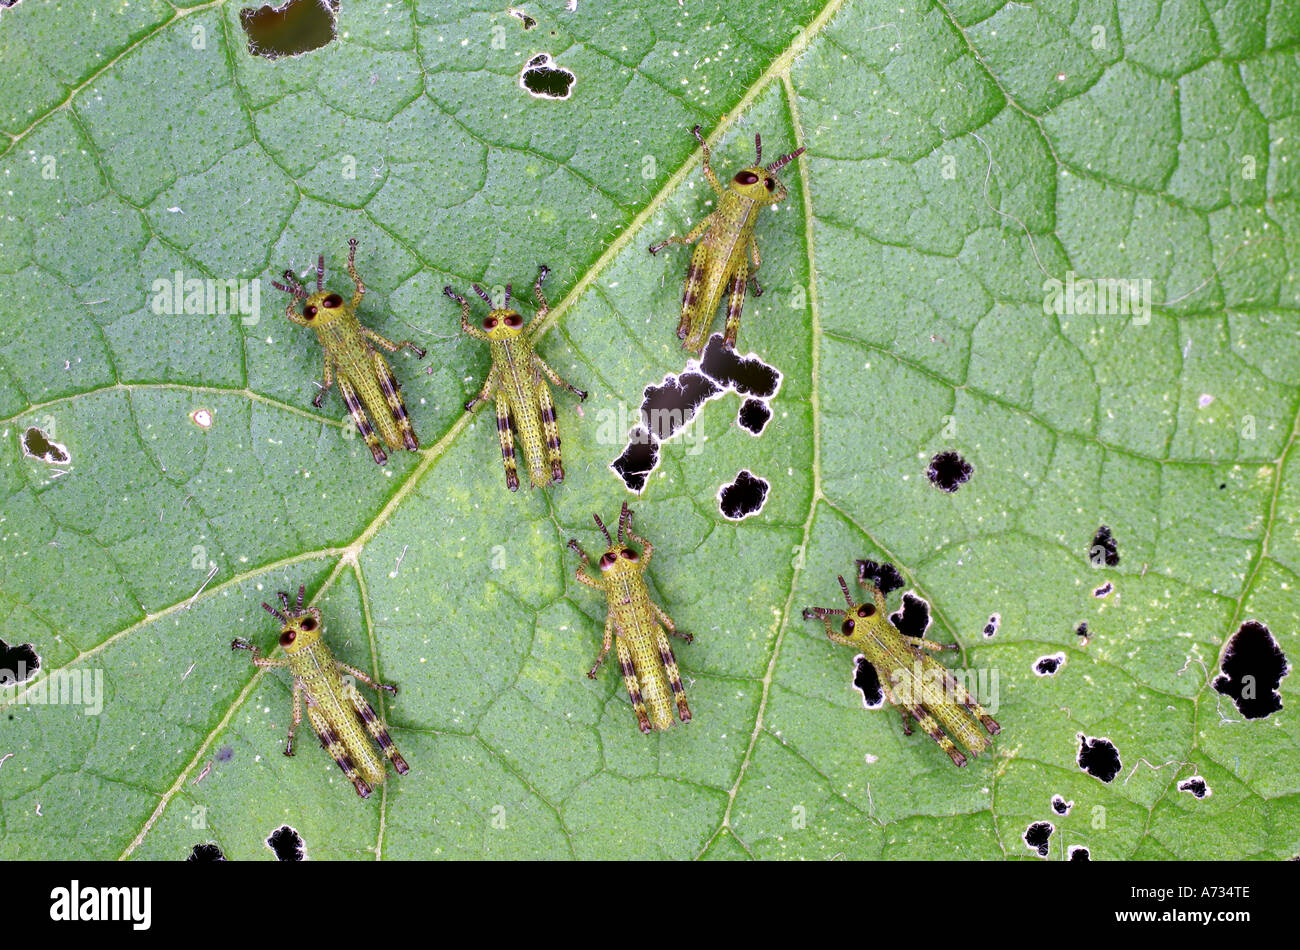 Six Giant Grasshopper Nymphs or Instars, Valanga irregularis Stock Photo